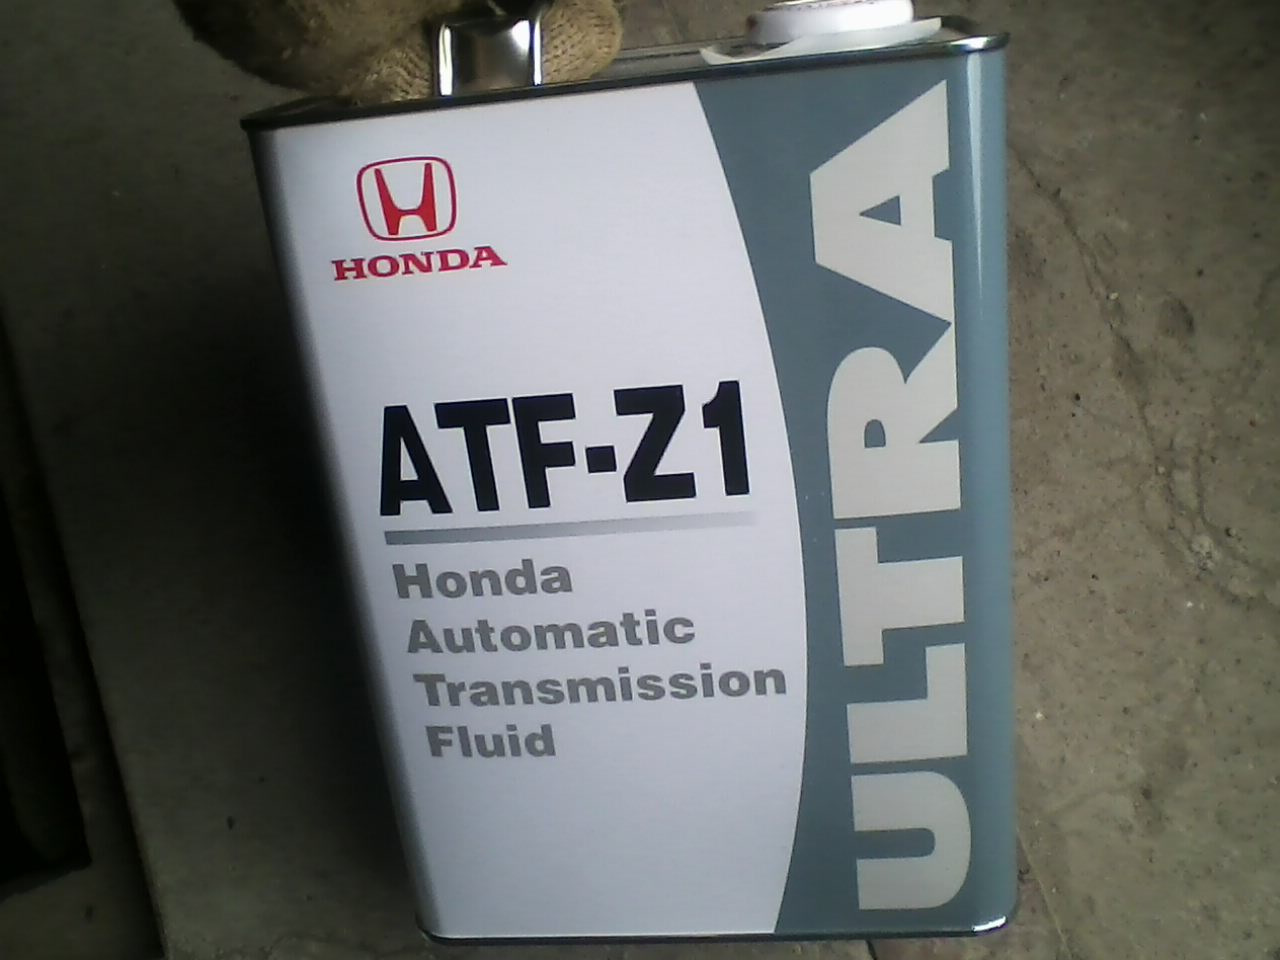 Масло вариатор fit. Хонда джаз масло в вариатор 1,3 4 литра. Масло Хонда фит 1.3 вариатор. Масло вариатор Хонда фит 2002г. Масло CVT Honda 1l.